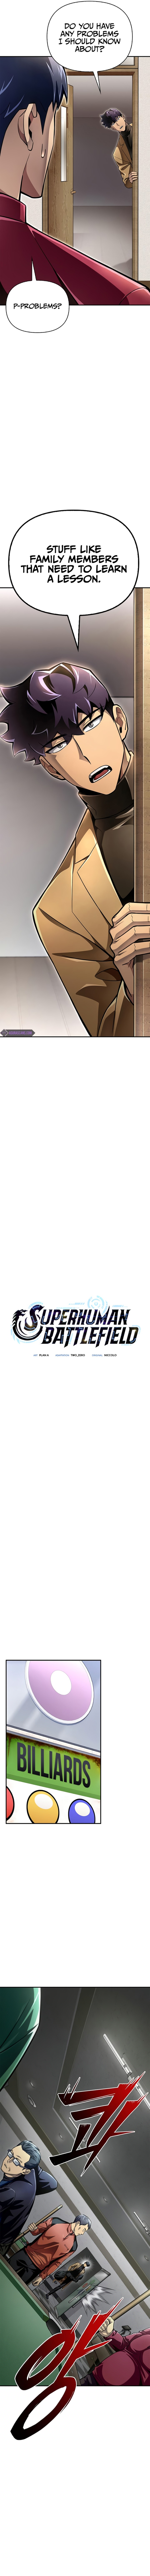 Superhuman Battlefield - Chapter 51 Page 3